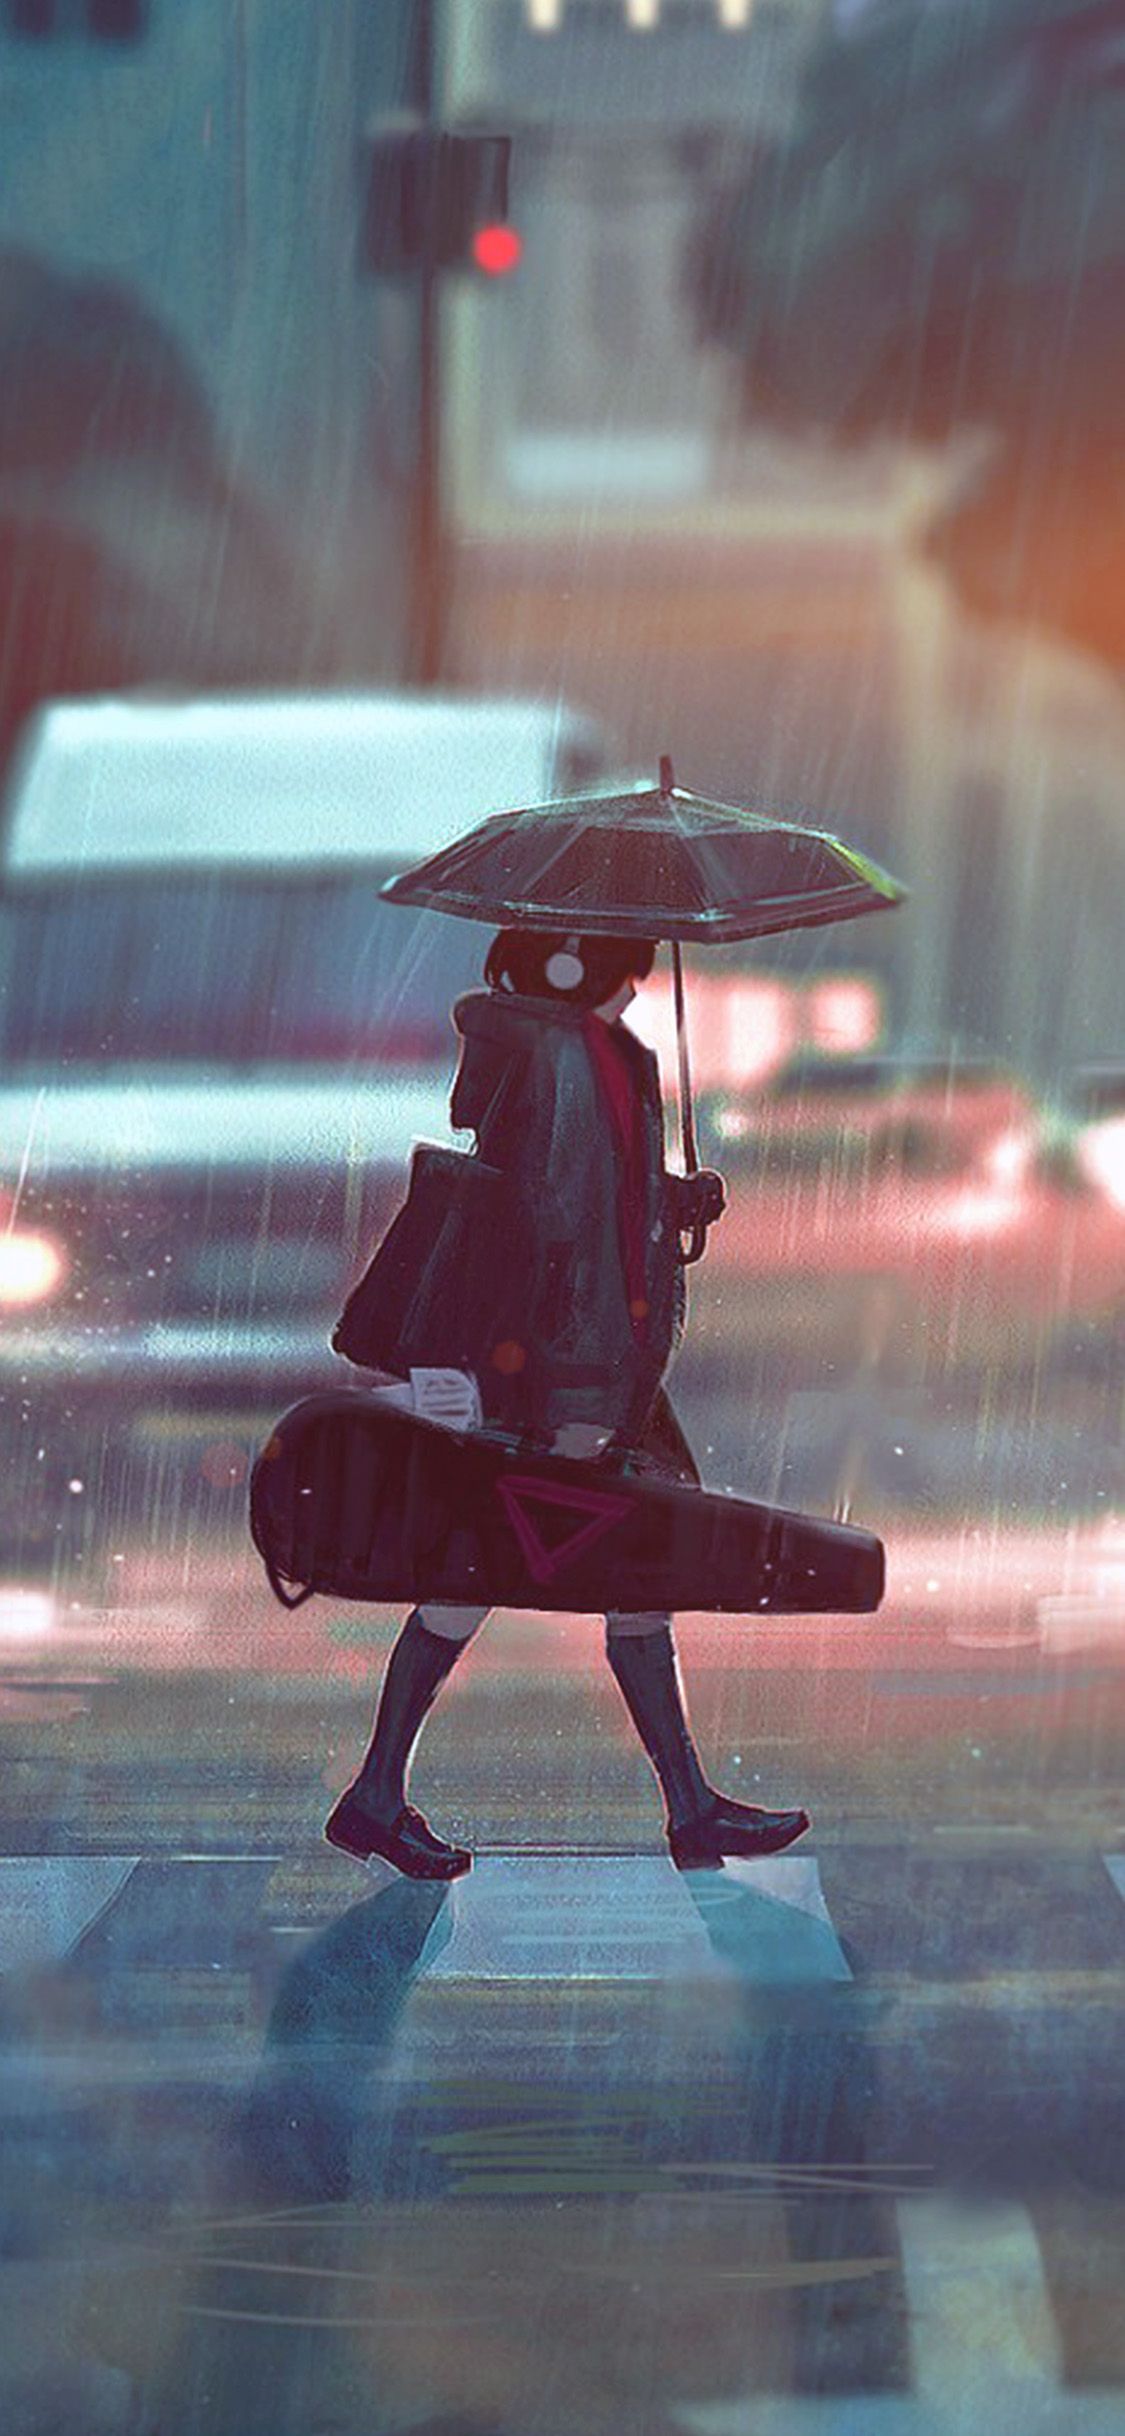 iPhone X wallpaper. rainy day anime paint girl art illustration flare